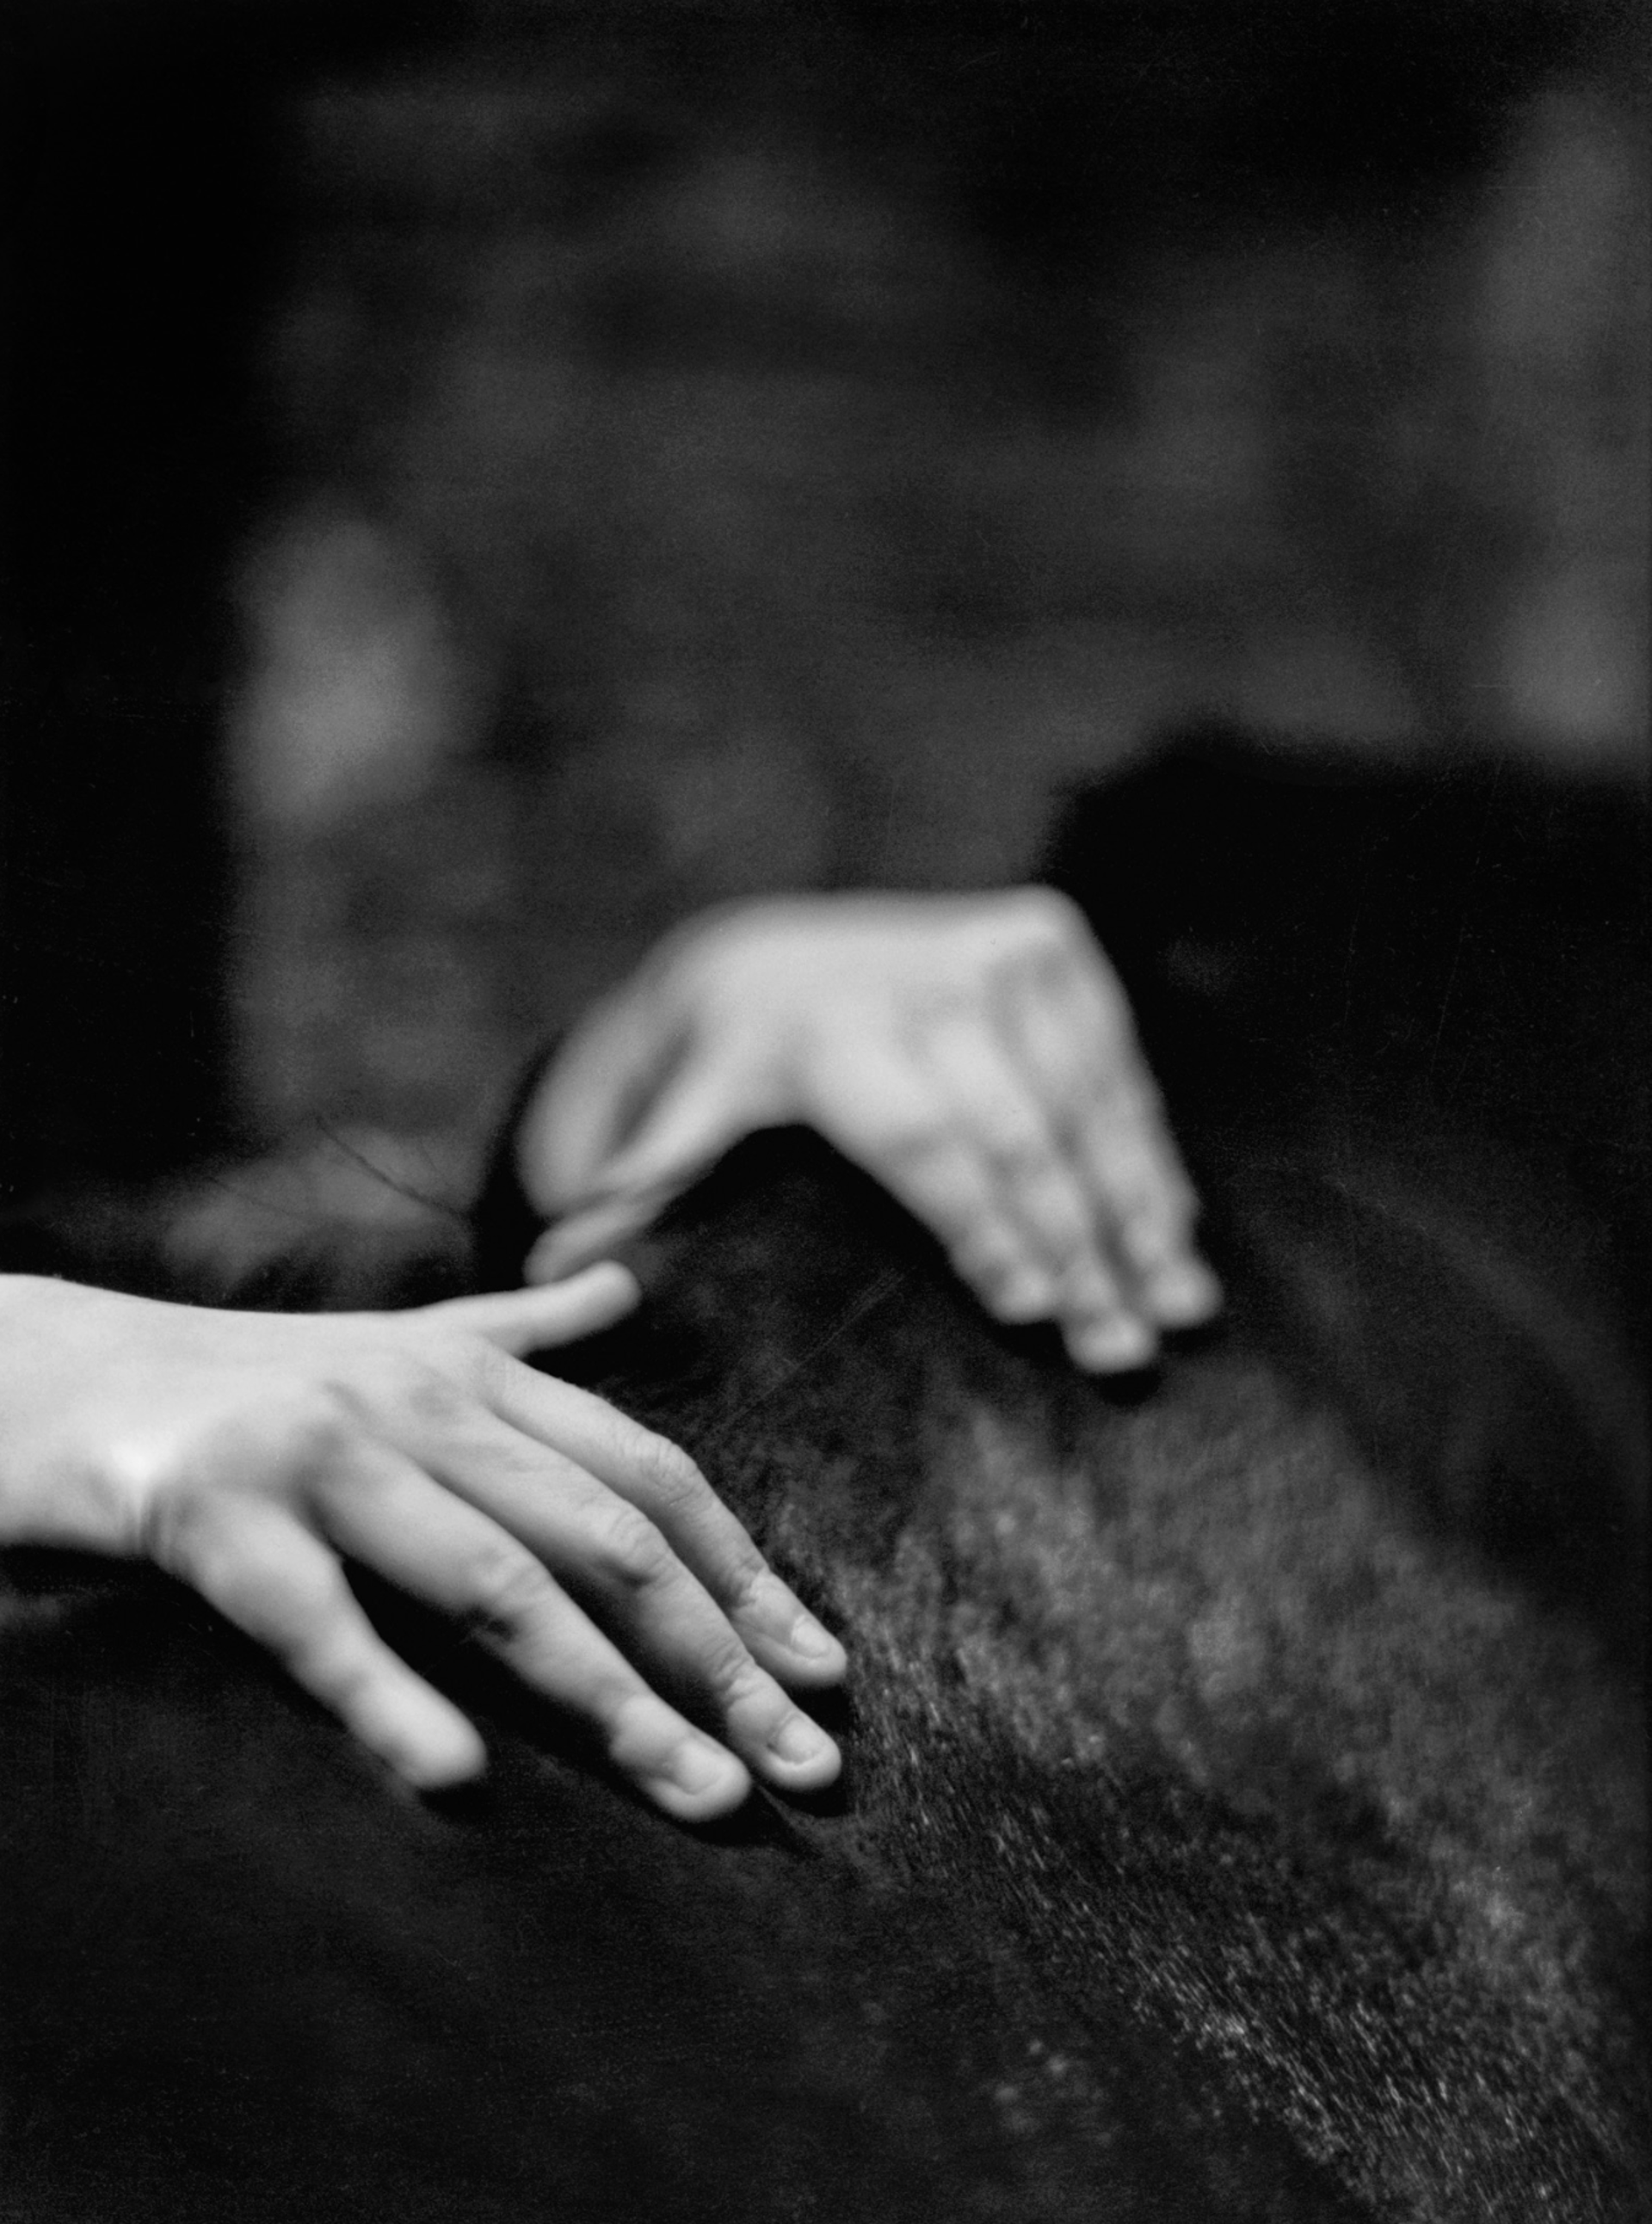 Hands by Constance Jaeggi